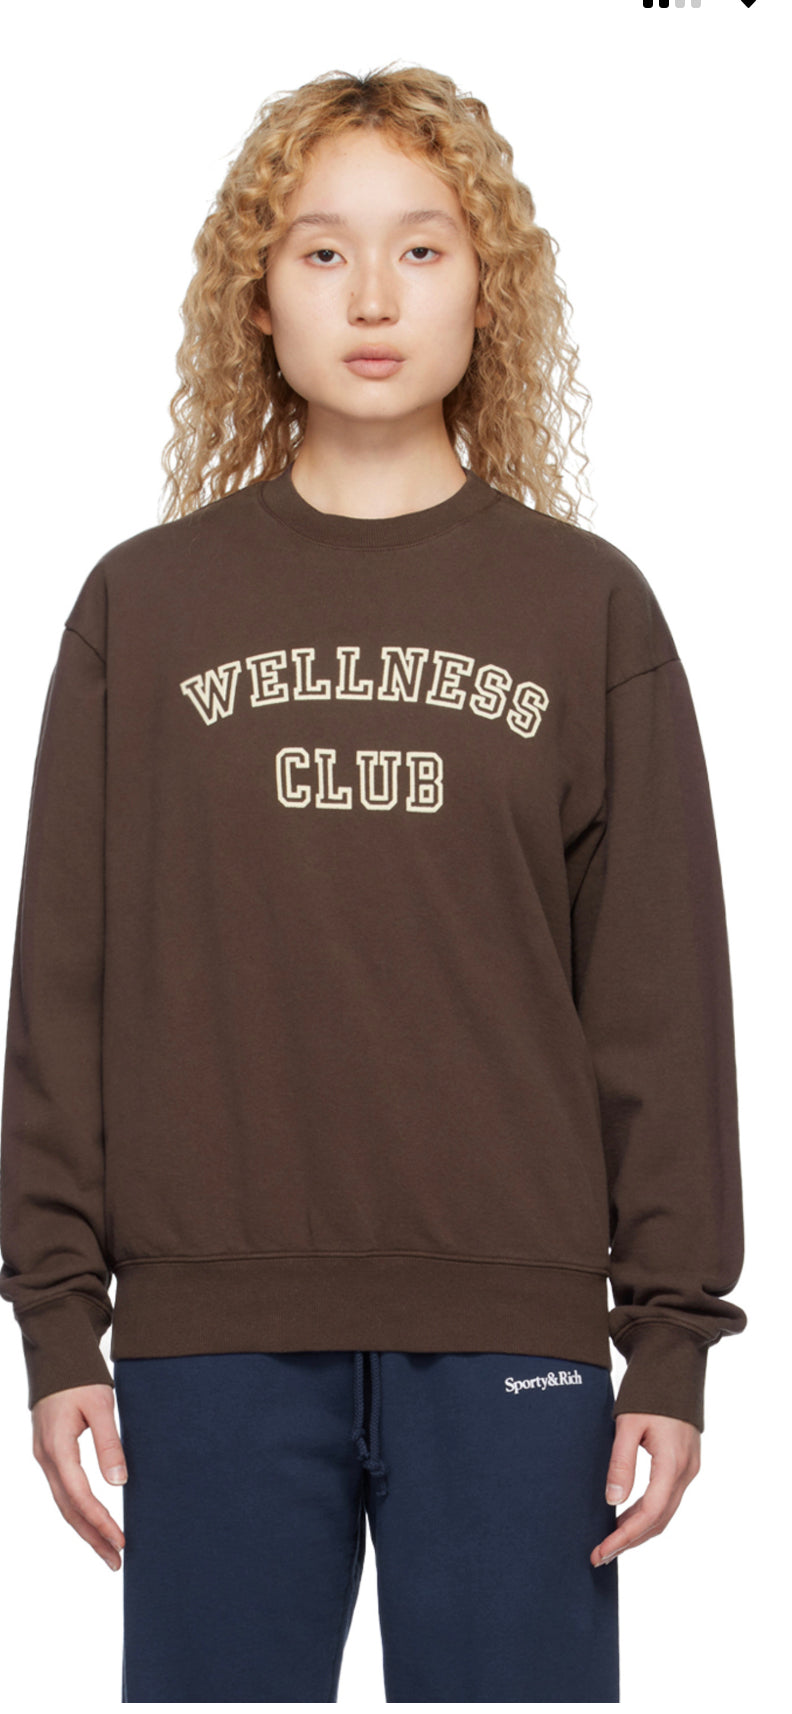 ‘Wellness Club’ Sweatshirt